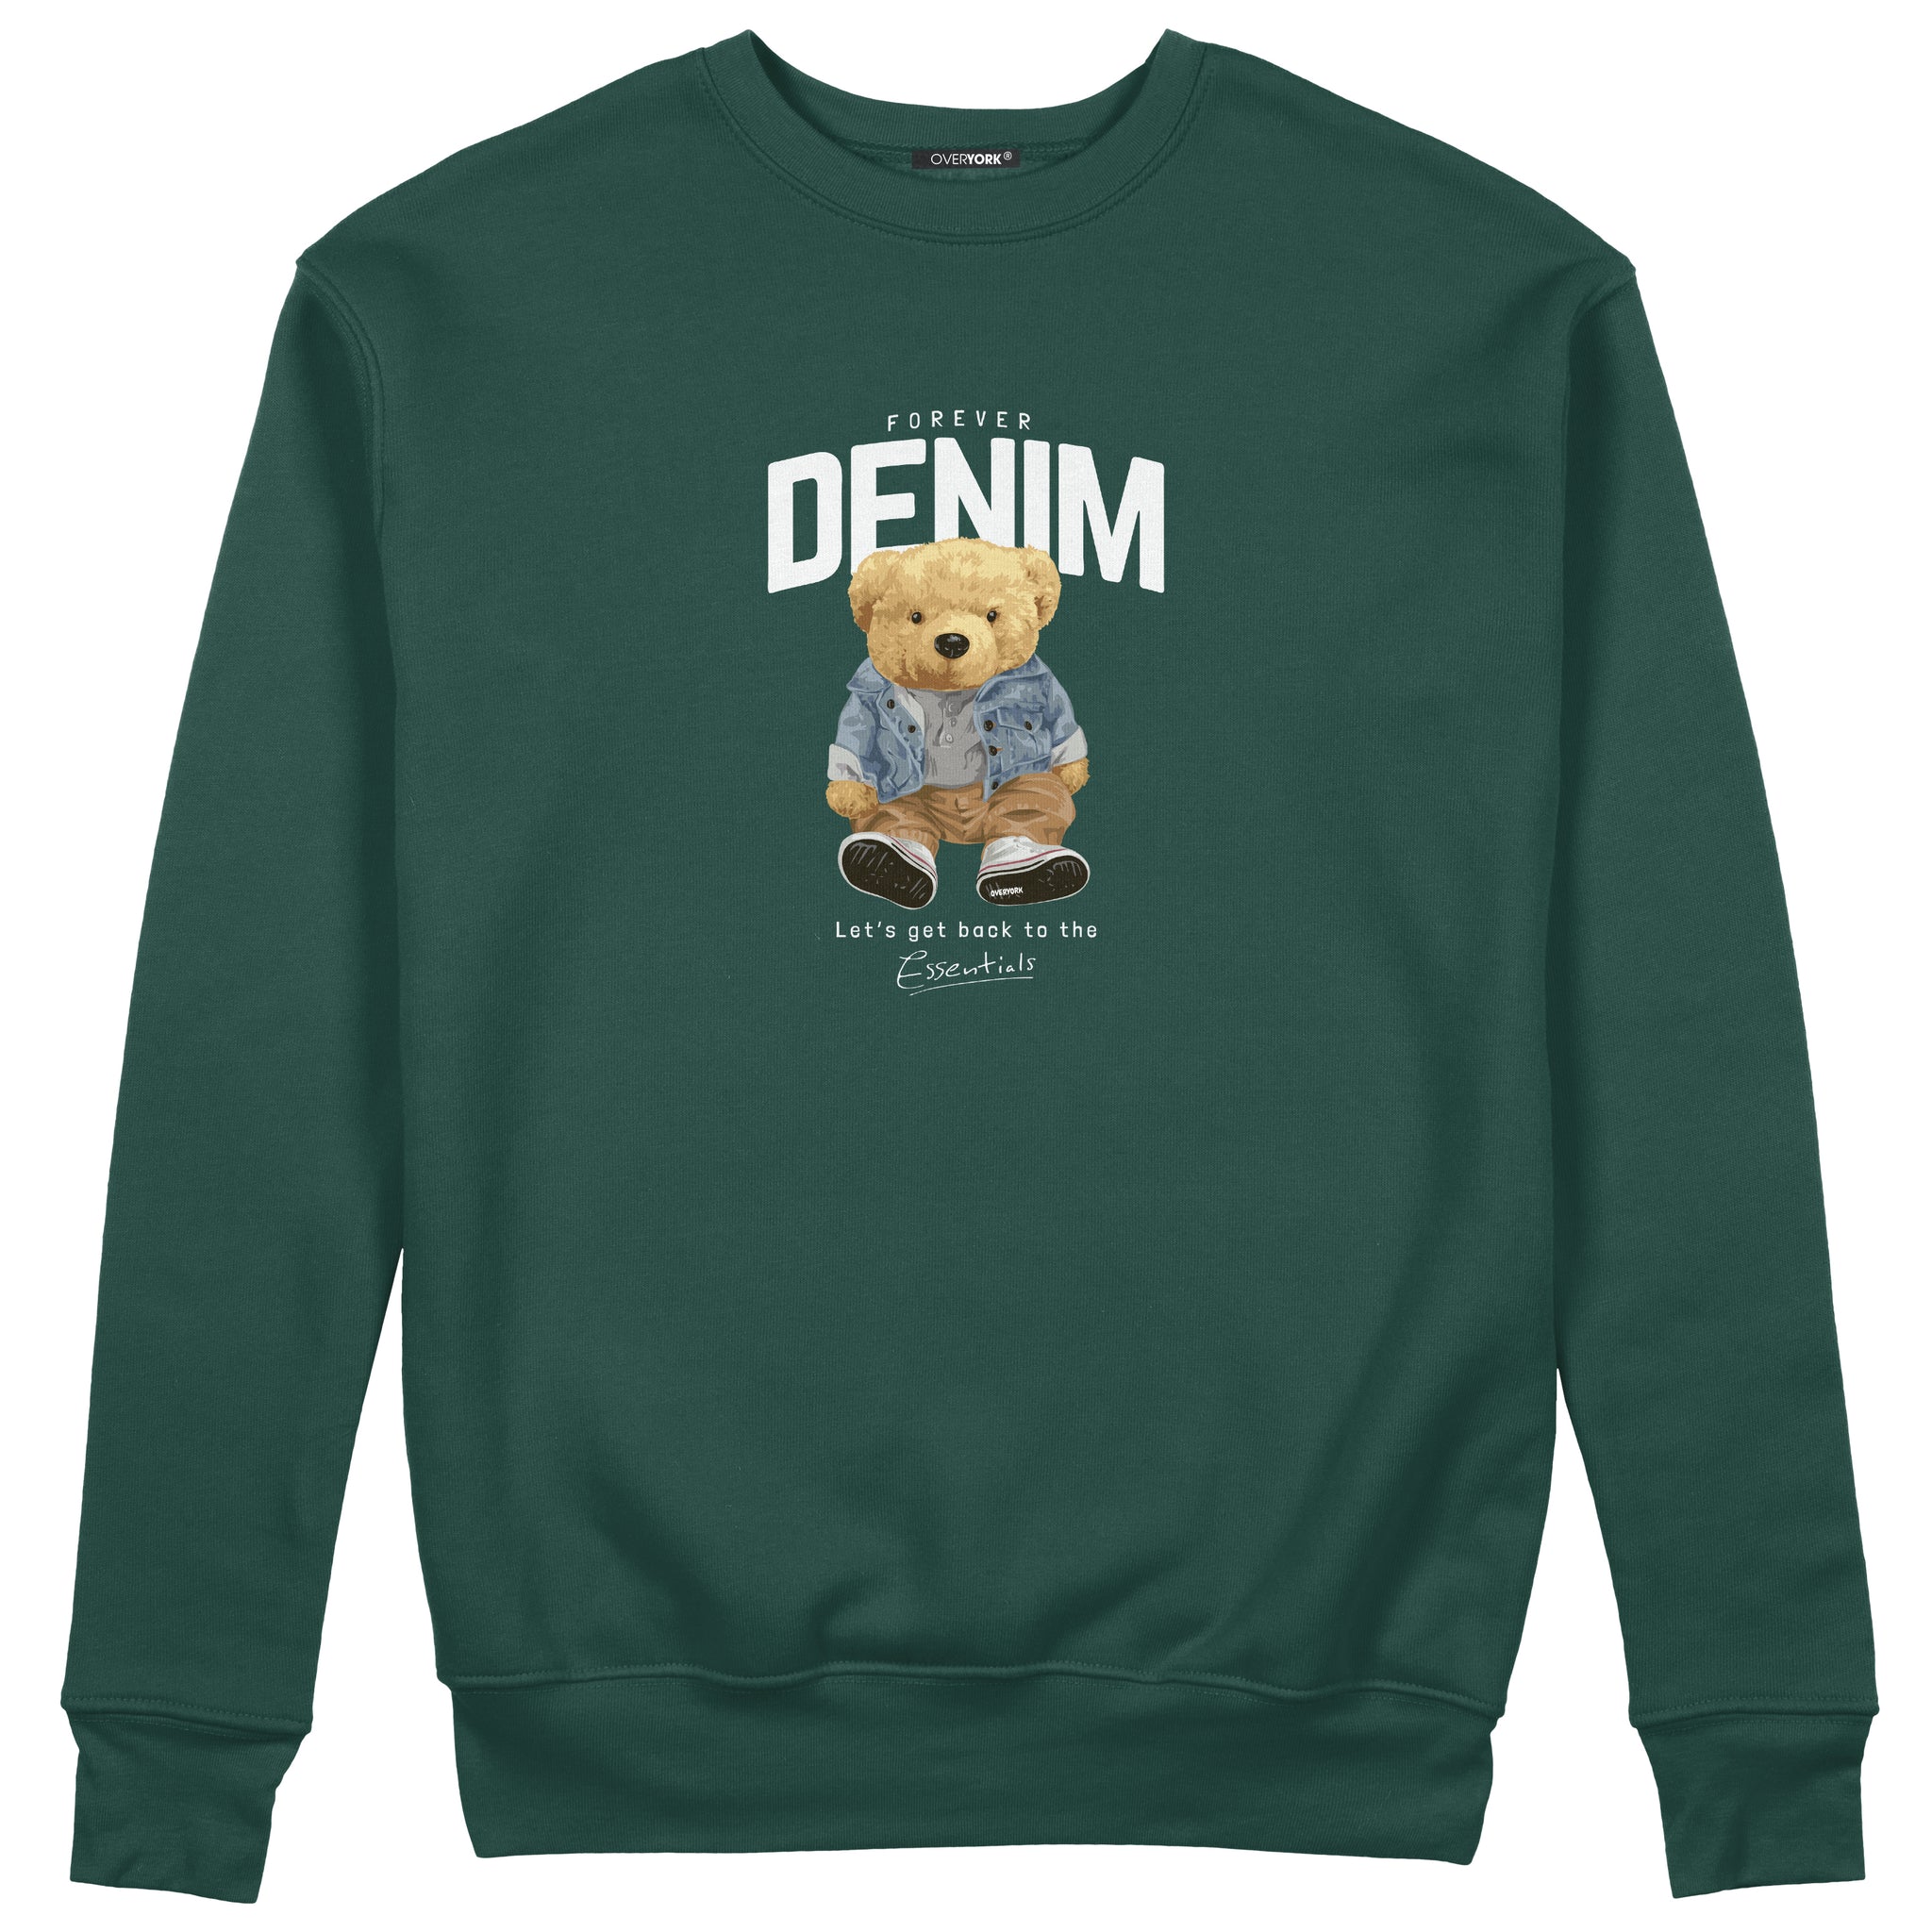 Denim - Sweatshirt